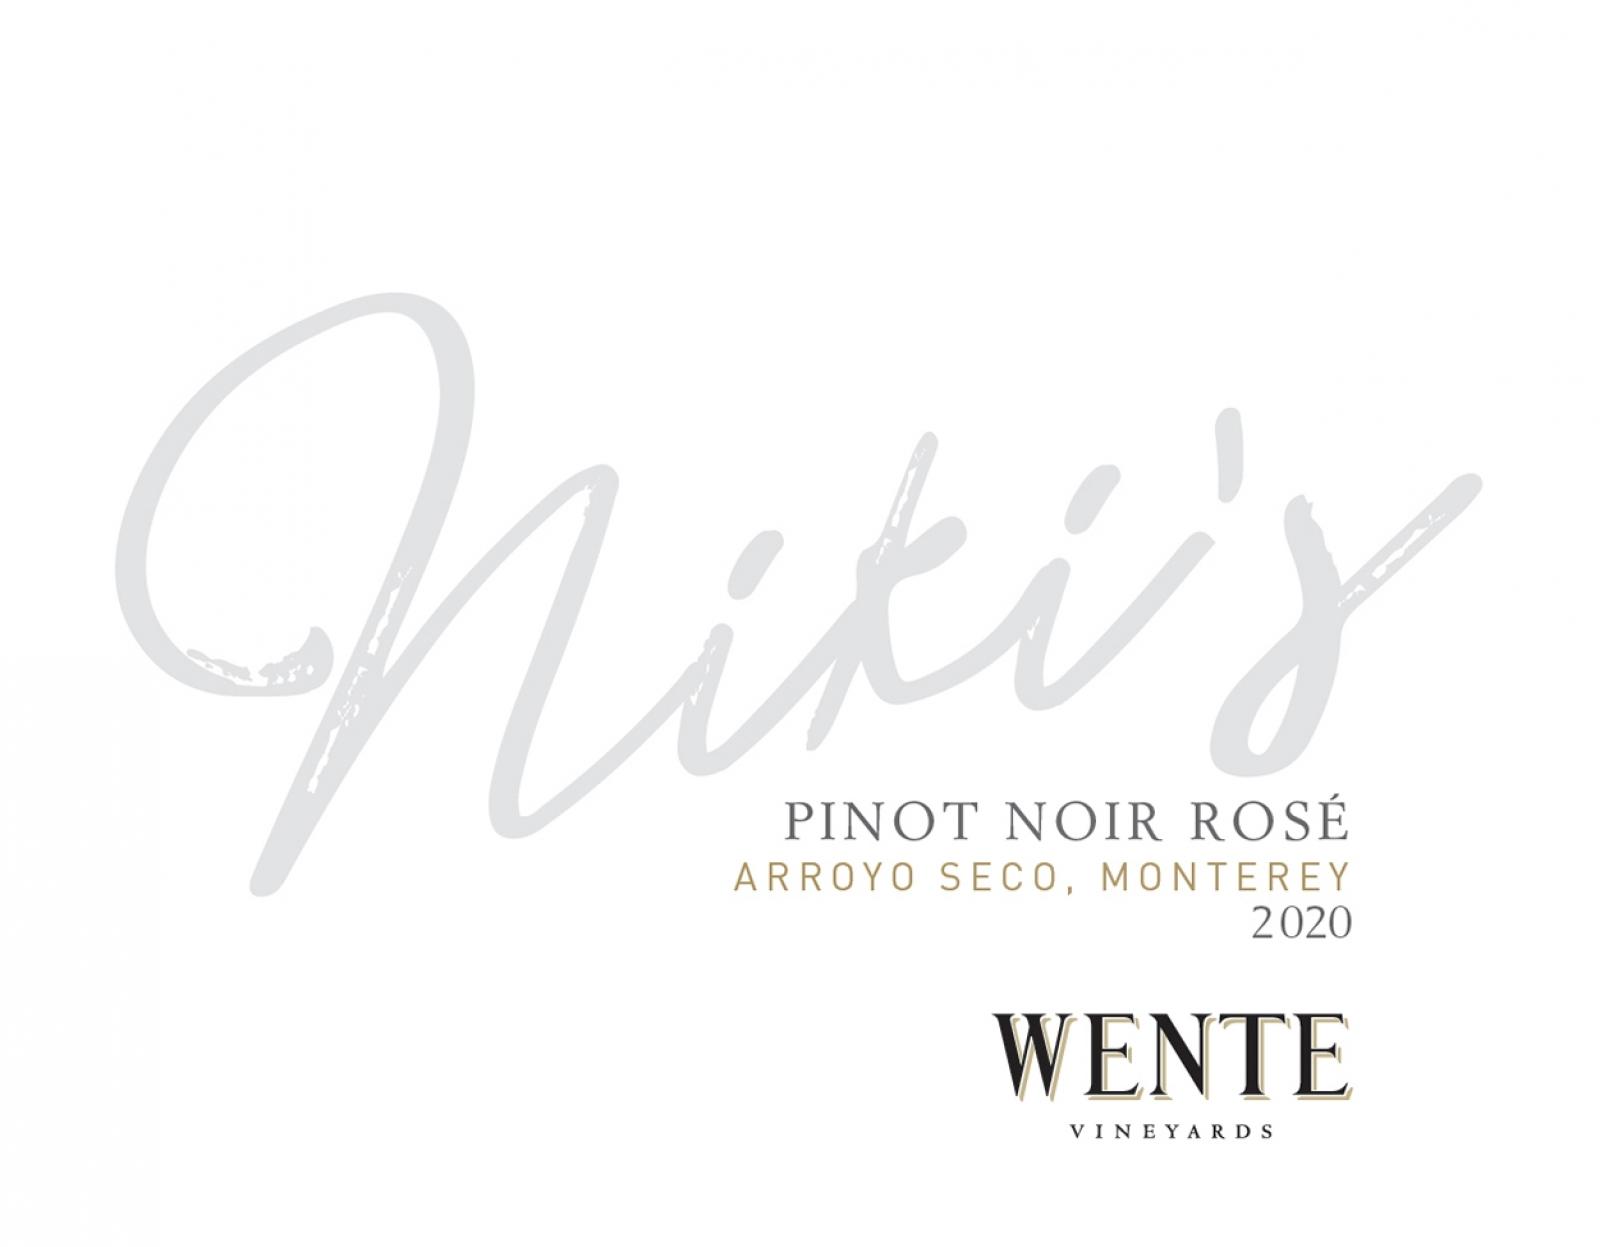 Niki's Pinot Noir Rose 2020